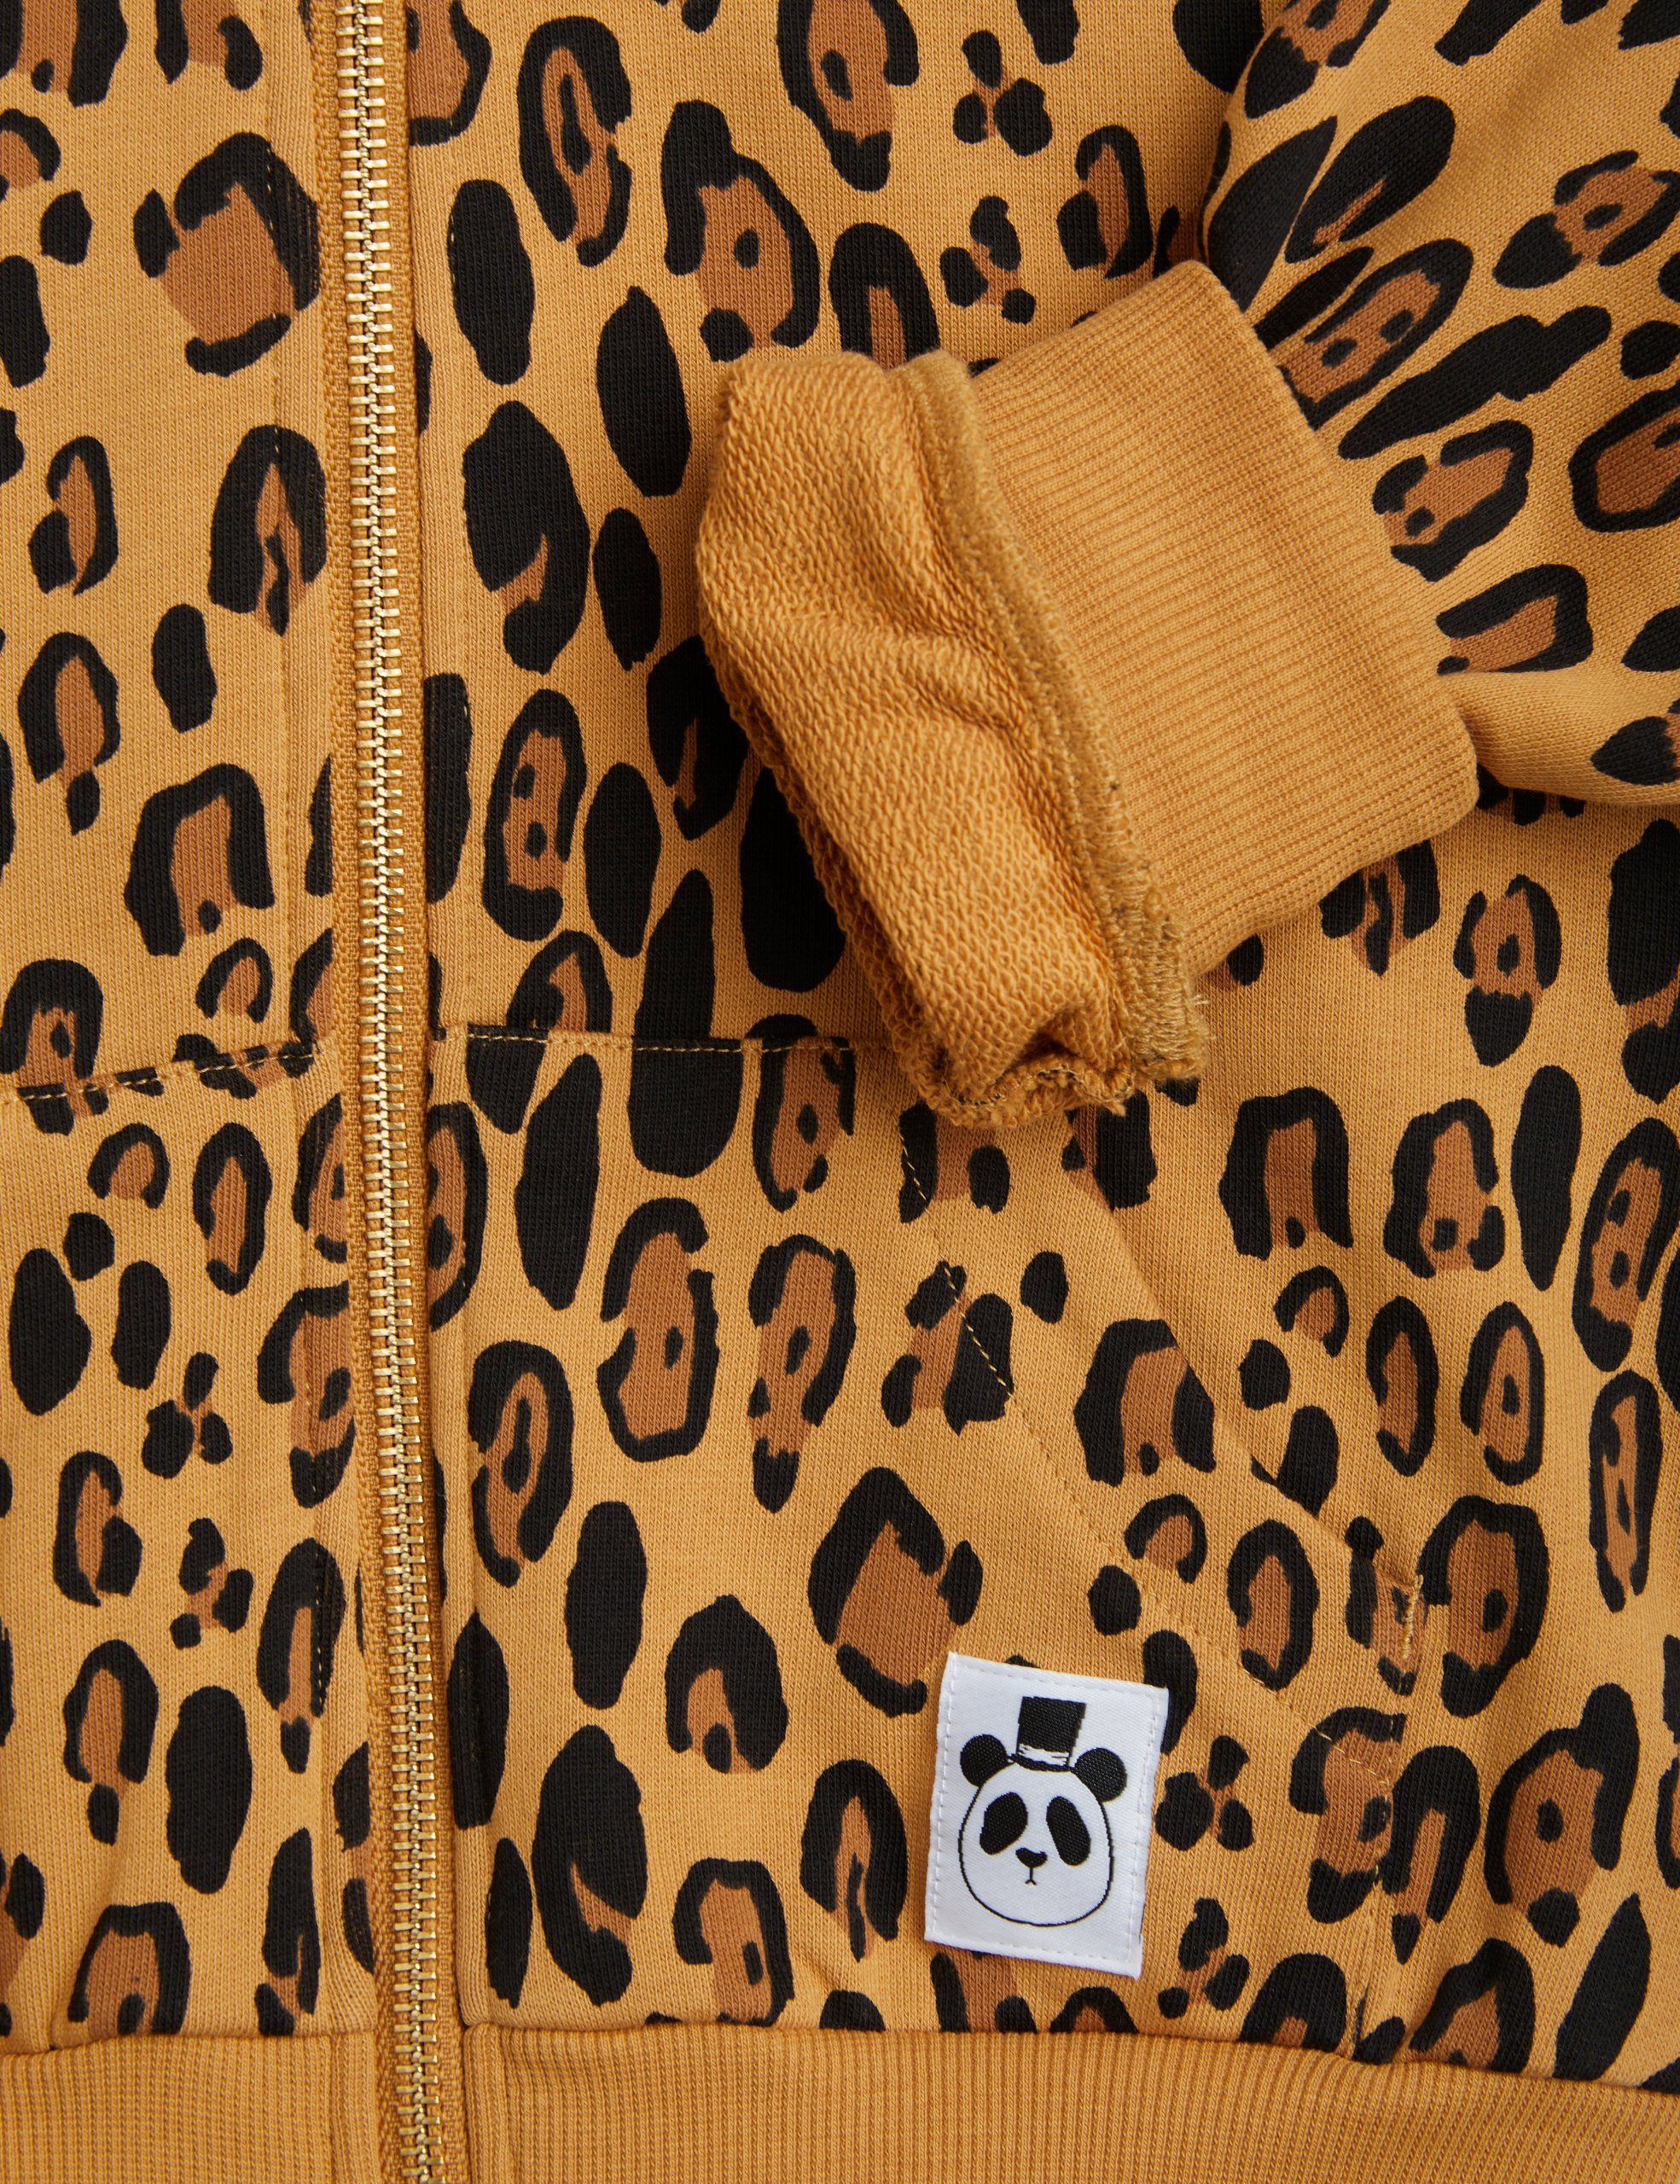 New Mini Rodini | Basic leopard zip hoodie